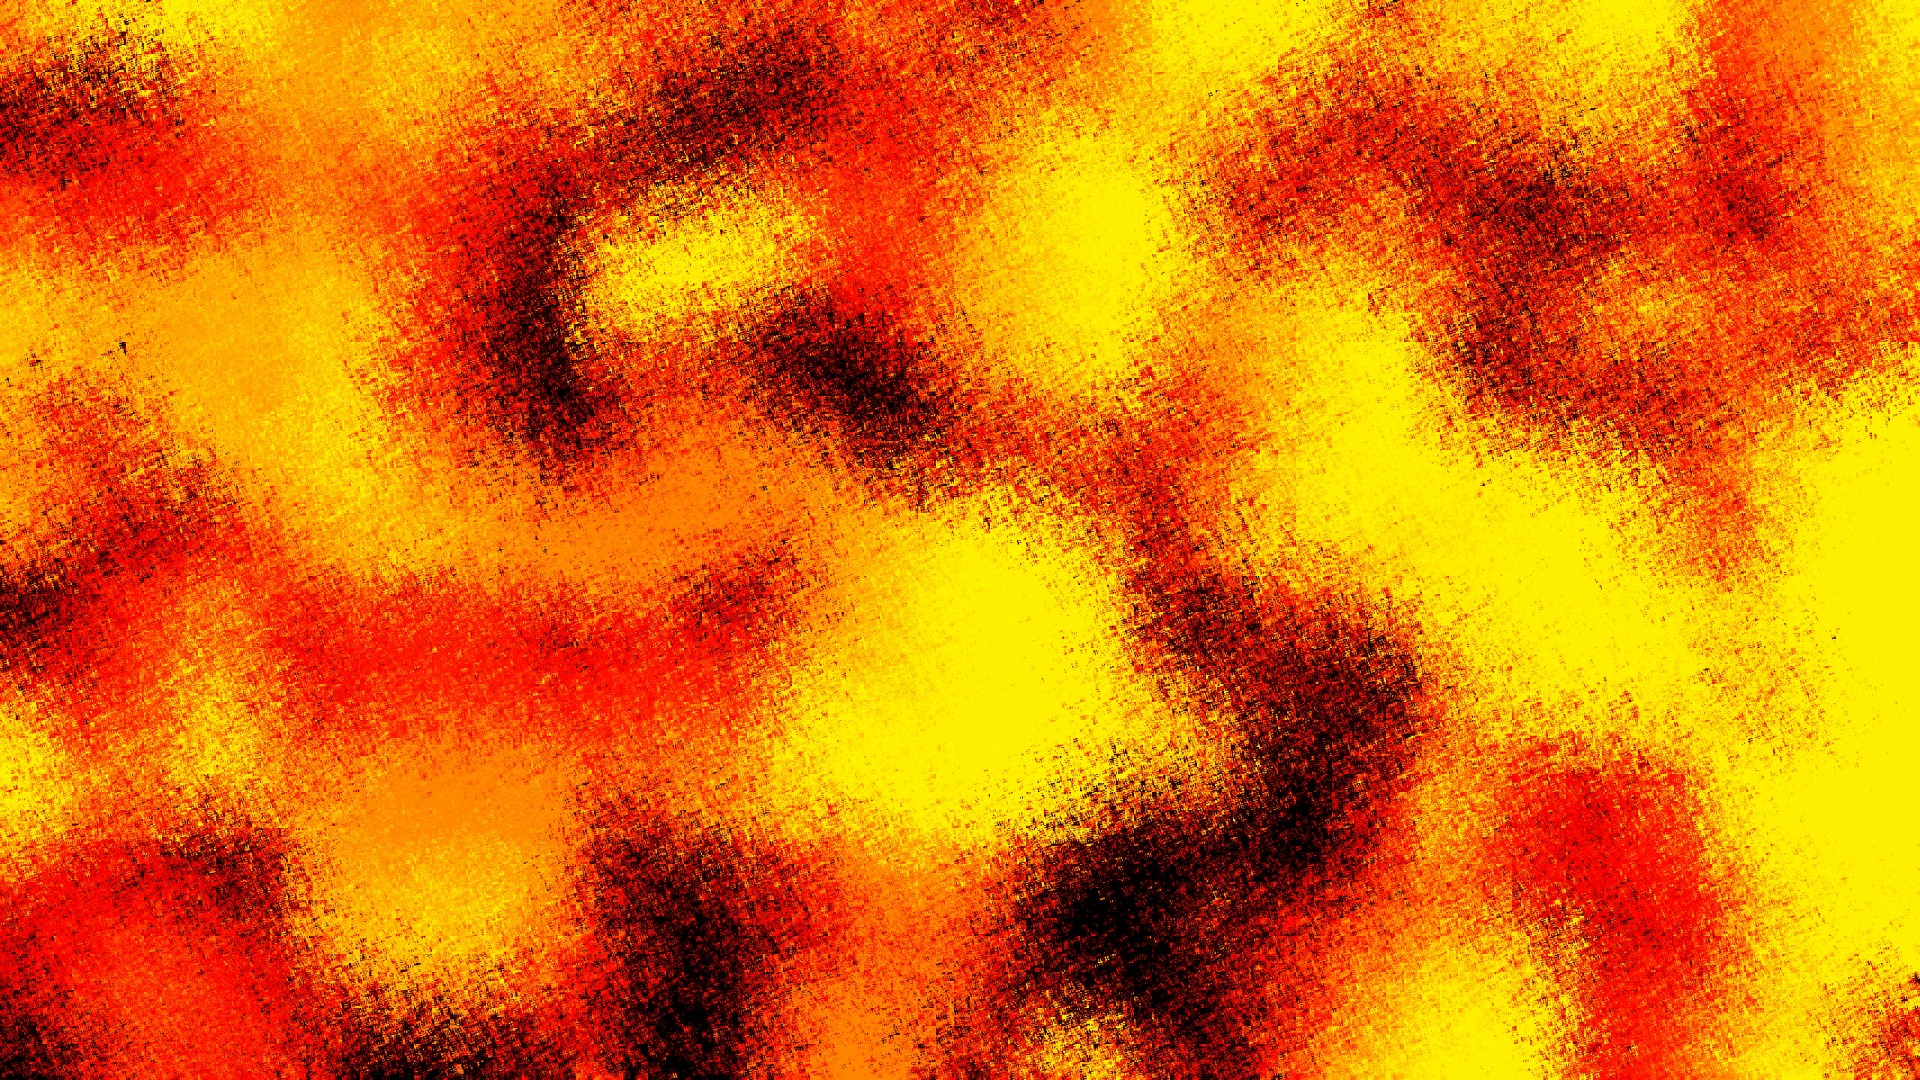 hazy orange wallpaper background pattern design colorful roof tiles background free photo